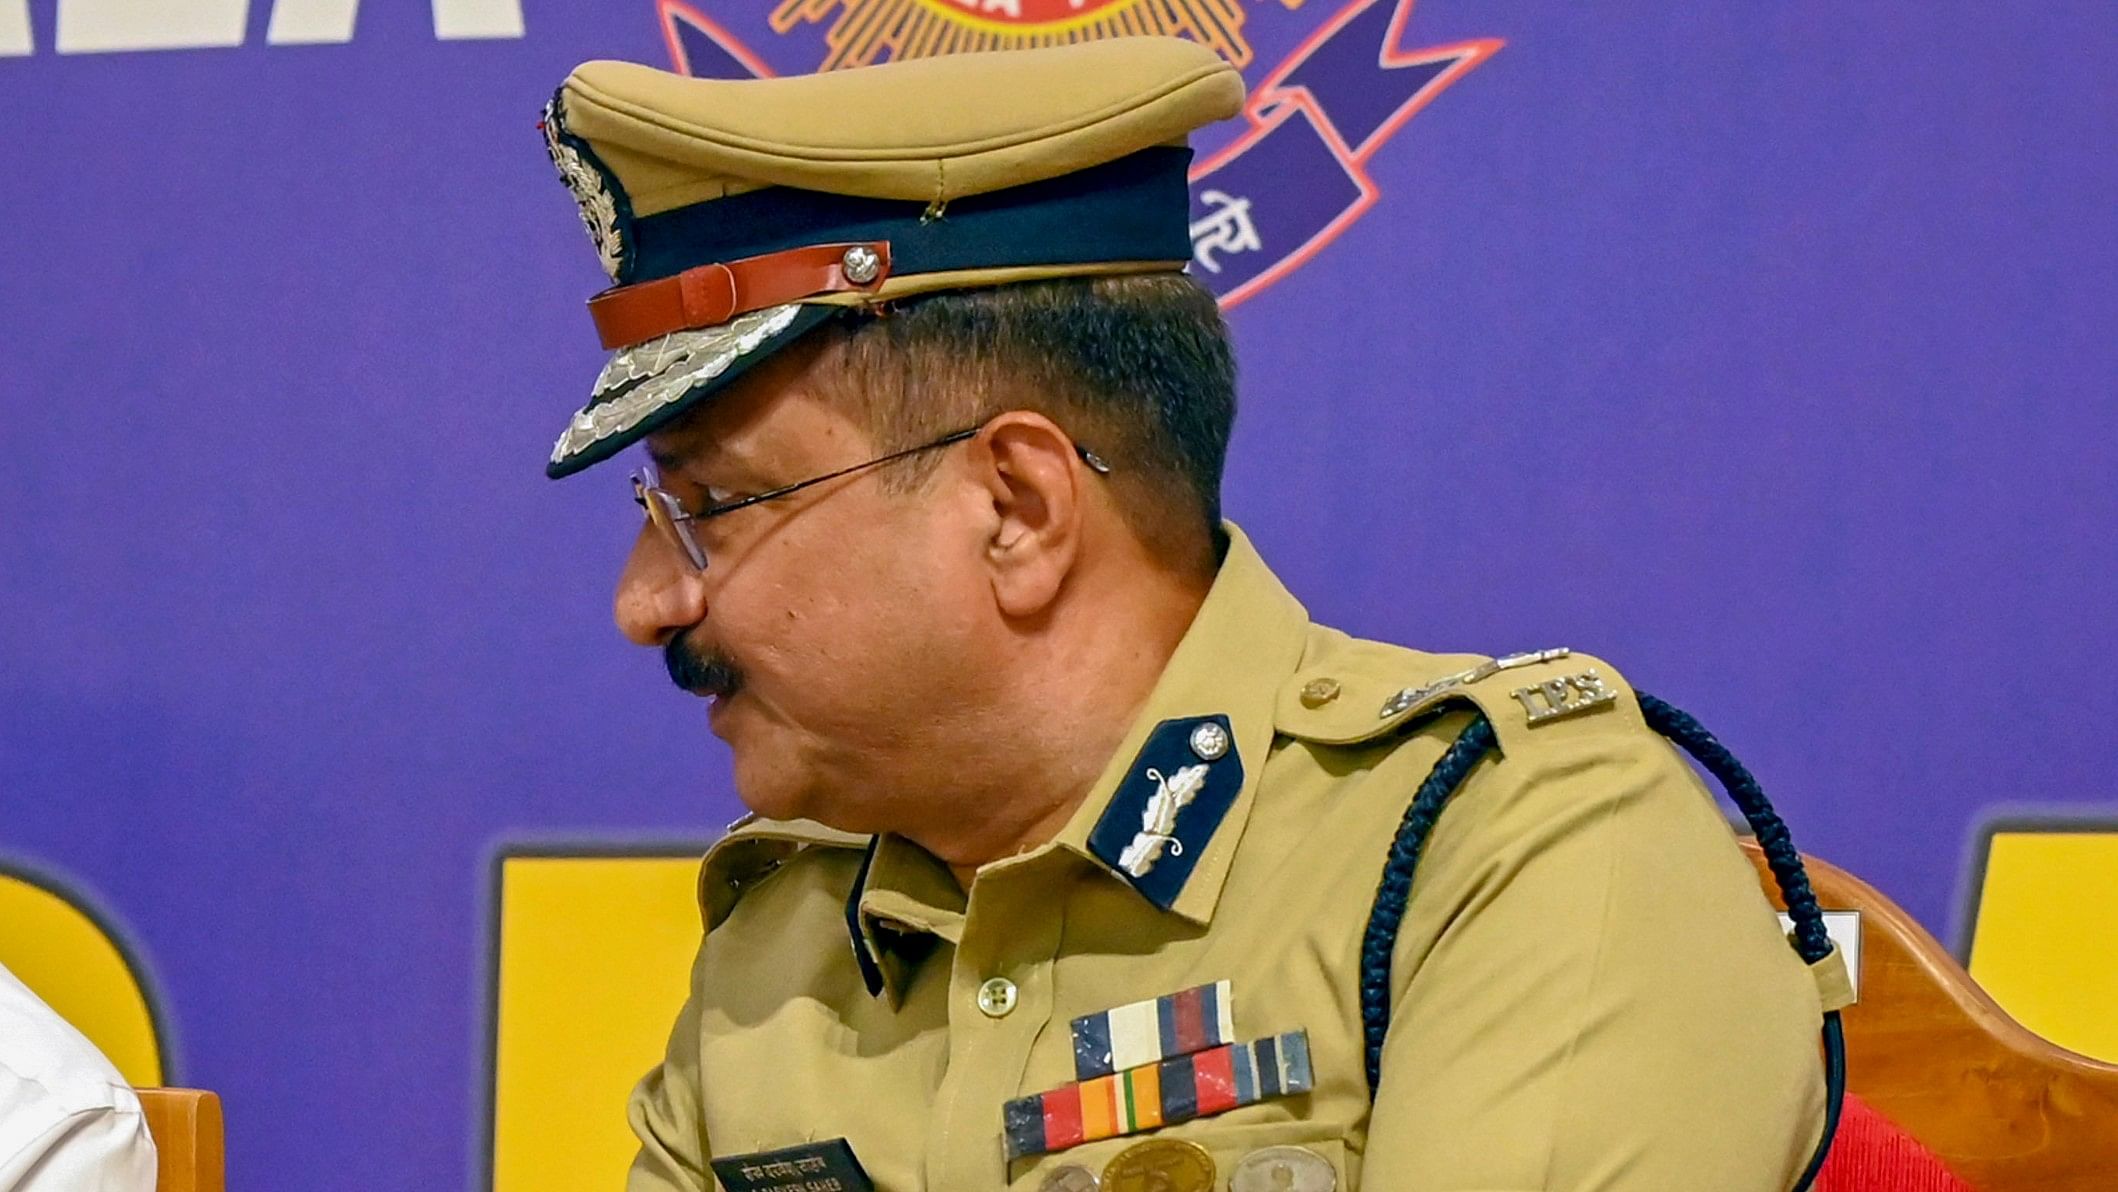 <div class="paragraphs"><p>Kerala Police Chief Shaik Darvesh Saheb </p></div>